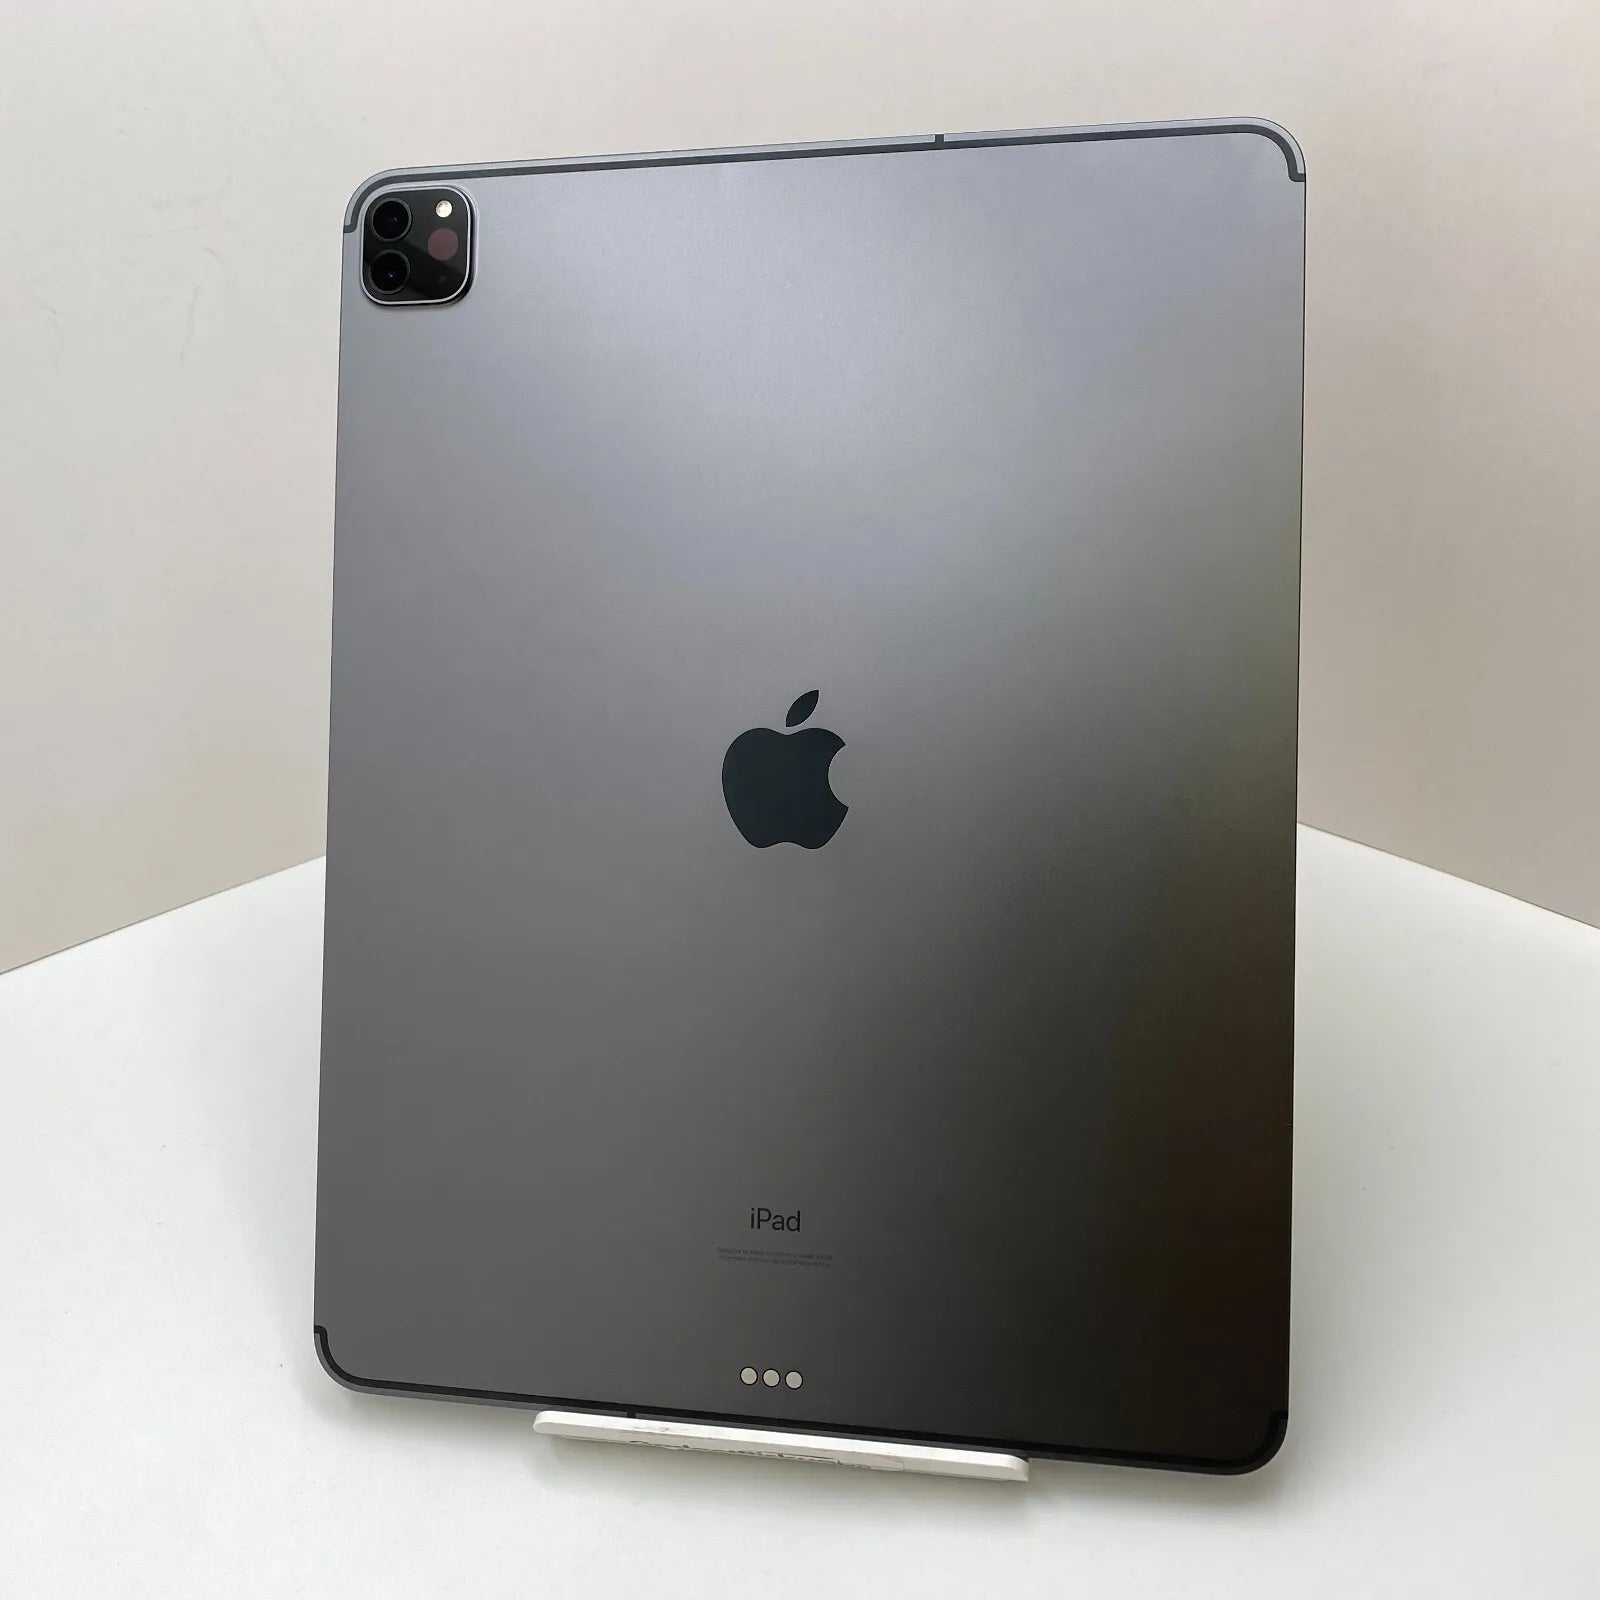 Apple iPad Pro 12.9 4th Gen. 256GB Space Gray (Unlocked) A2069 - Open Box